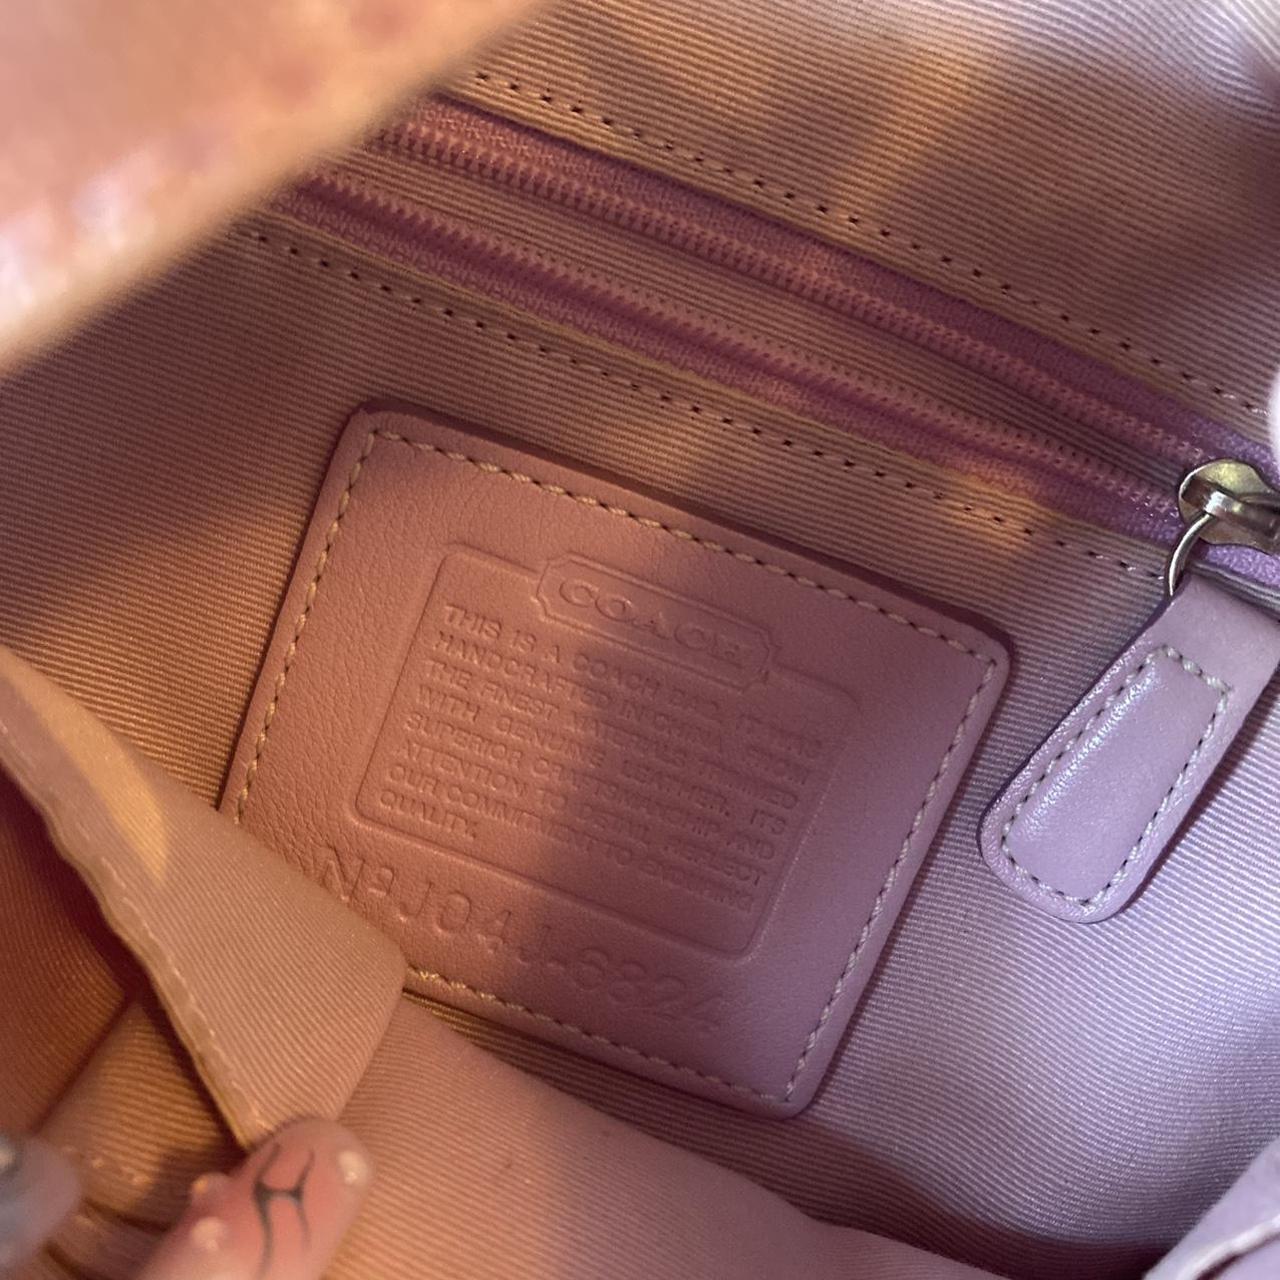 pricing help!!! early 2000s pink monogram coach shoulder bag/purse : r/Depop